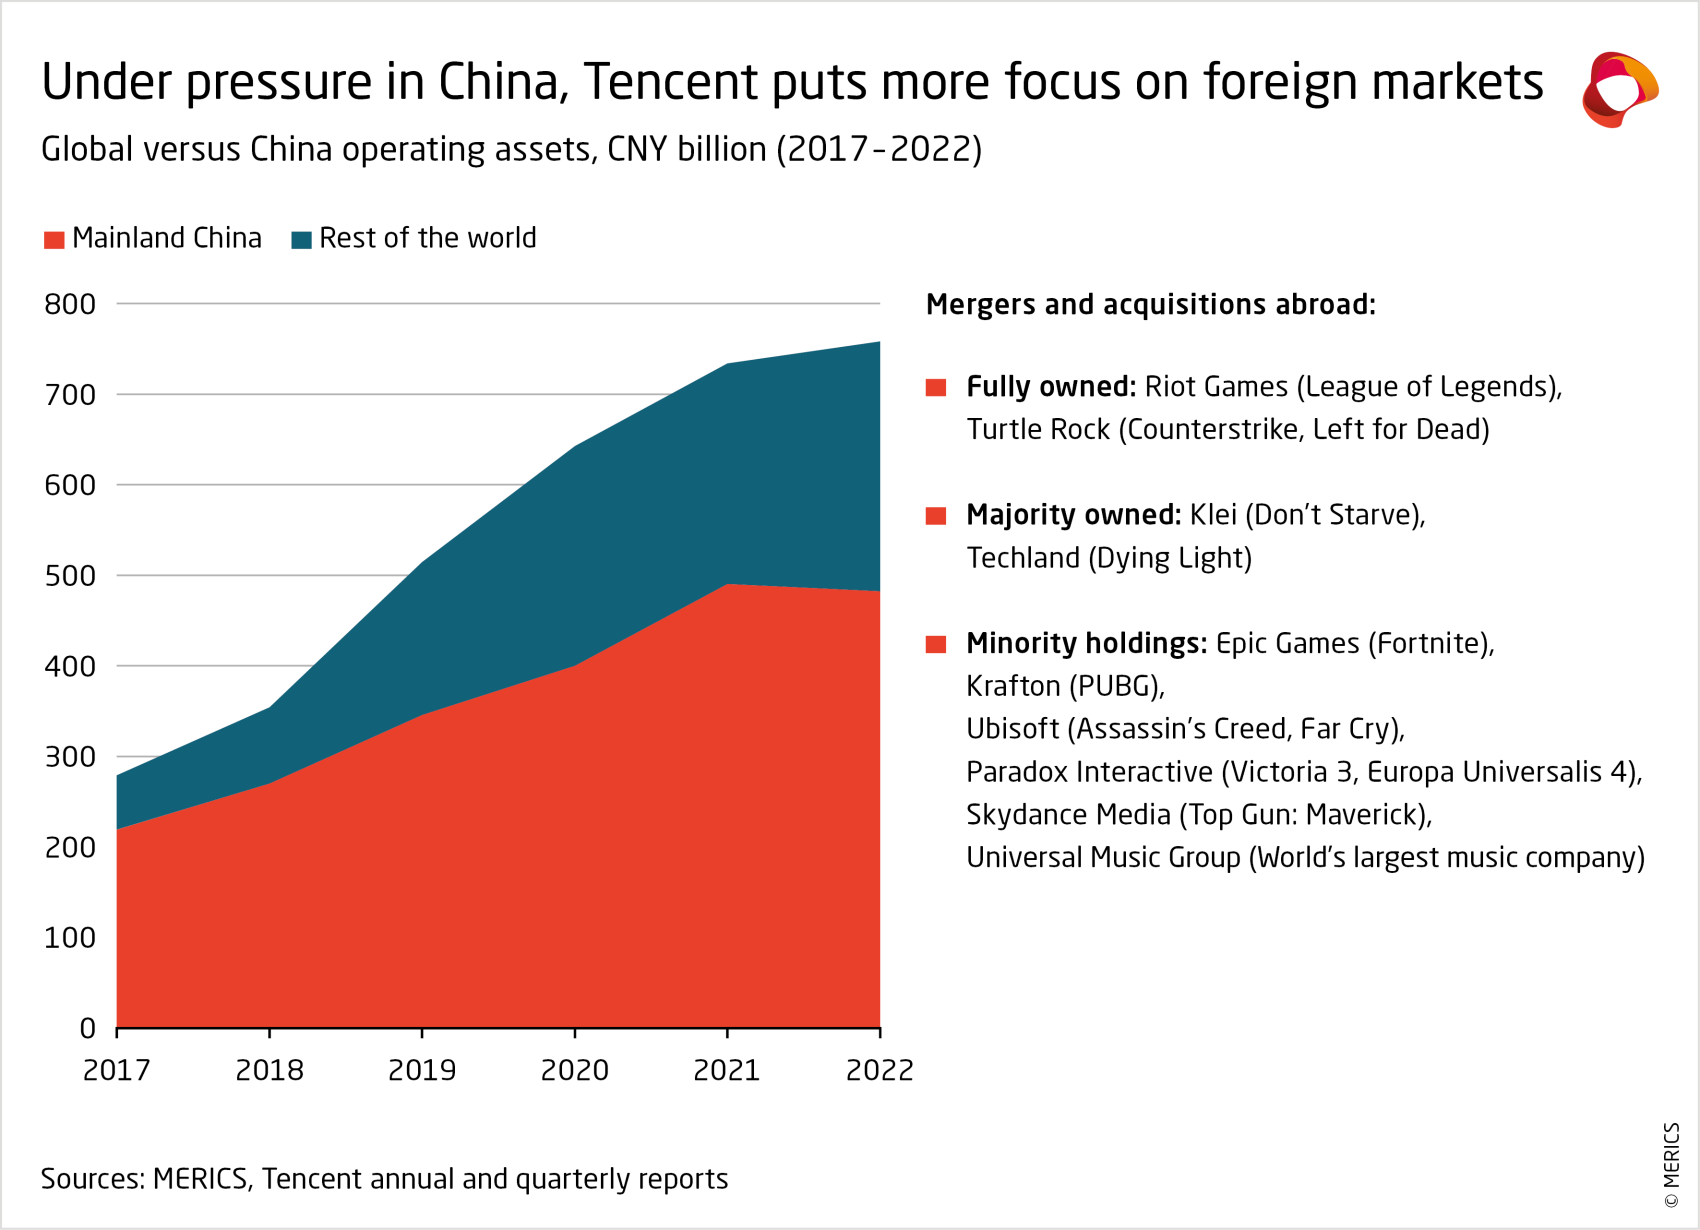 merics-tencent-global-versus-china-operating assets-between-2017-and-2022.png